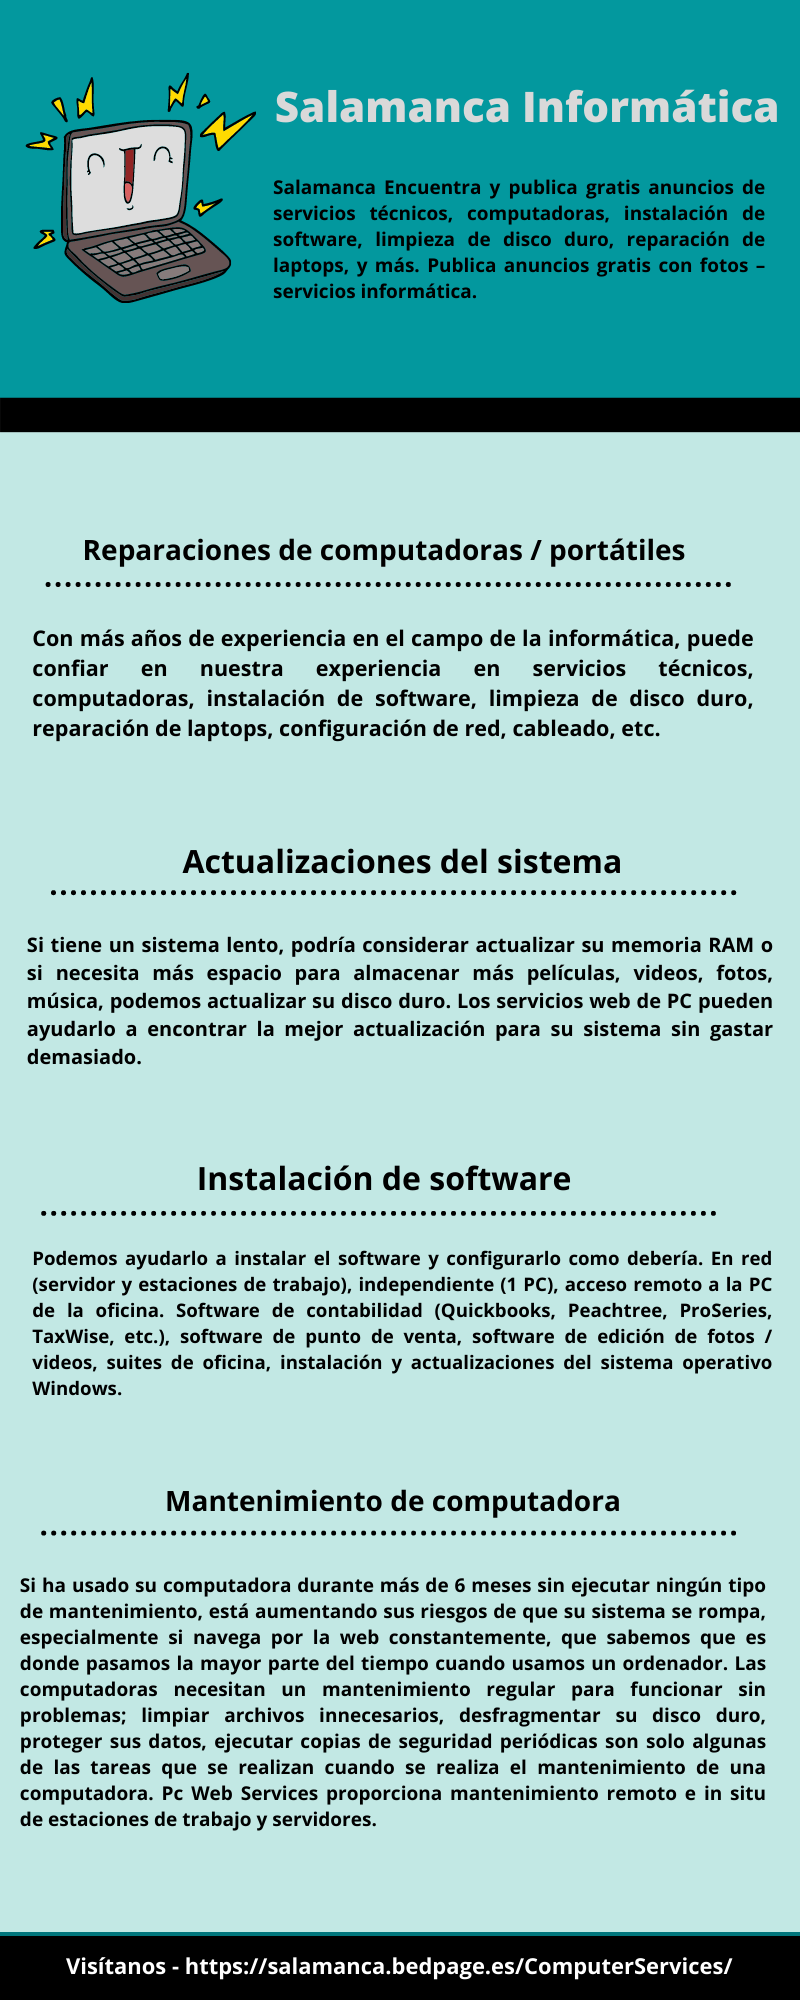 Salamanca - anuncios clasificados de reparación de computadoras, programación, soporte técnico - servicios de informática.png  by ashutosh24